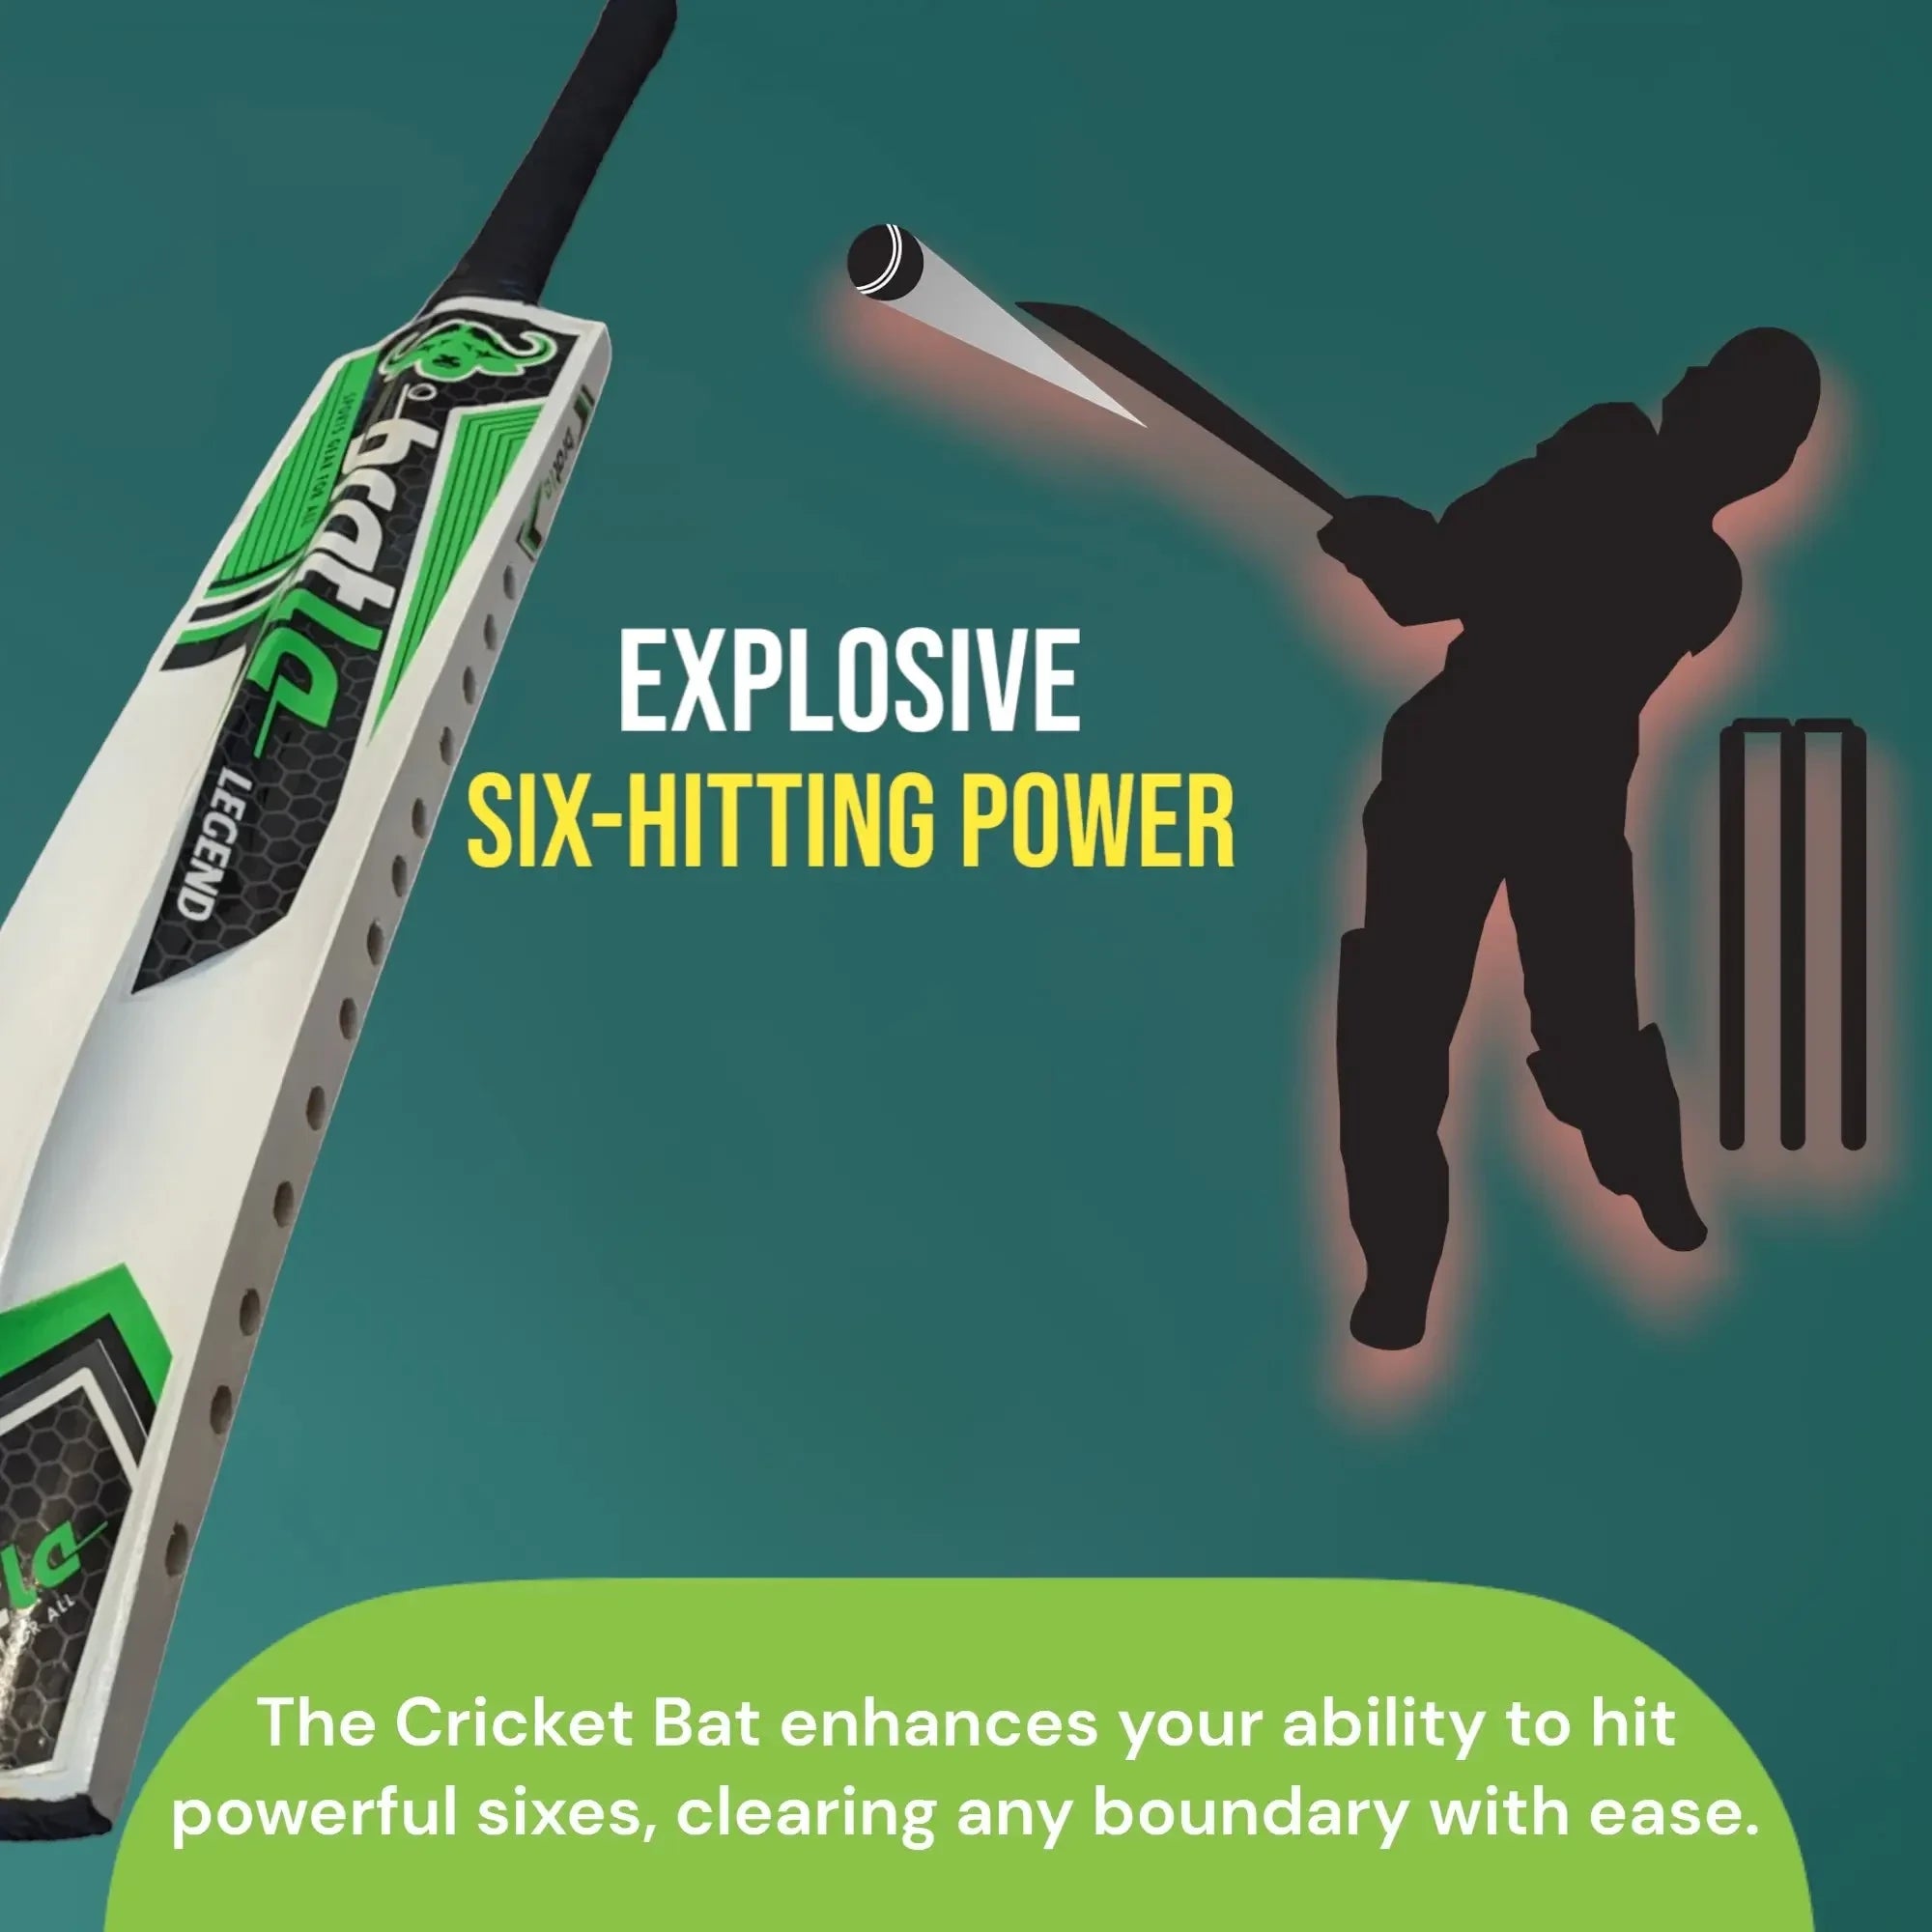 Bratla Legend Cricket Bat for Tape Tennis Ball Full Size Men - BATS - SOFTBALL